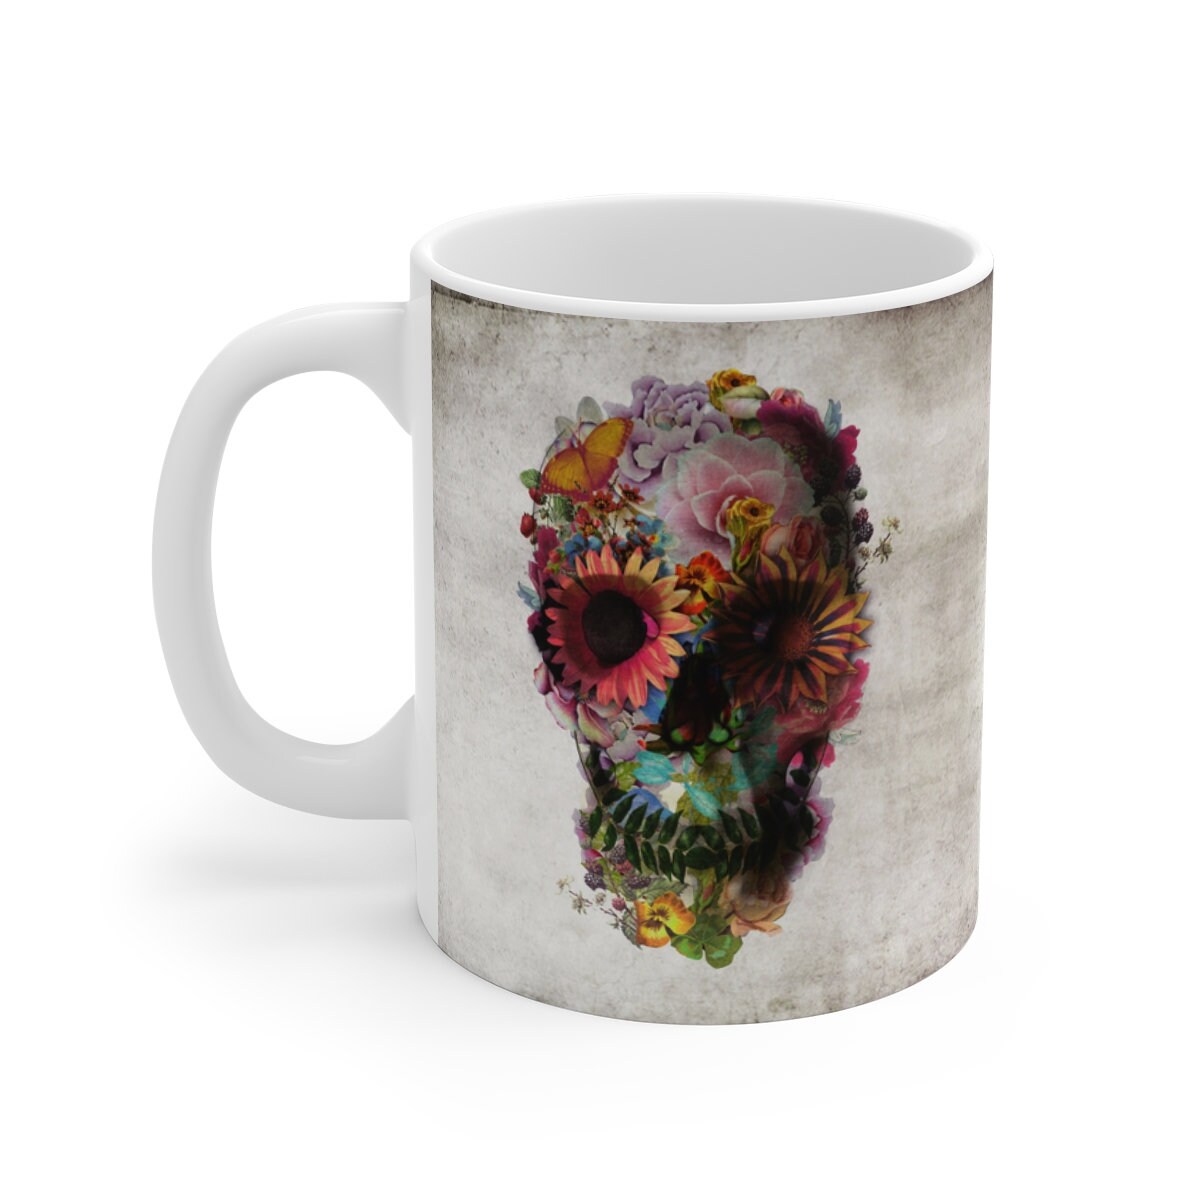 Flower Skull Mug, Sugar Skull Mug Gift, Boho Skull Ceramic Coffee Mug, Gothic Floral Skull Art Mug, Skull Art Print Mug Gift